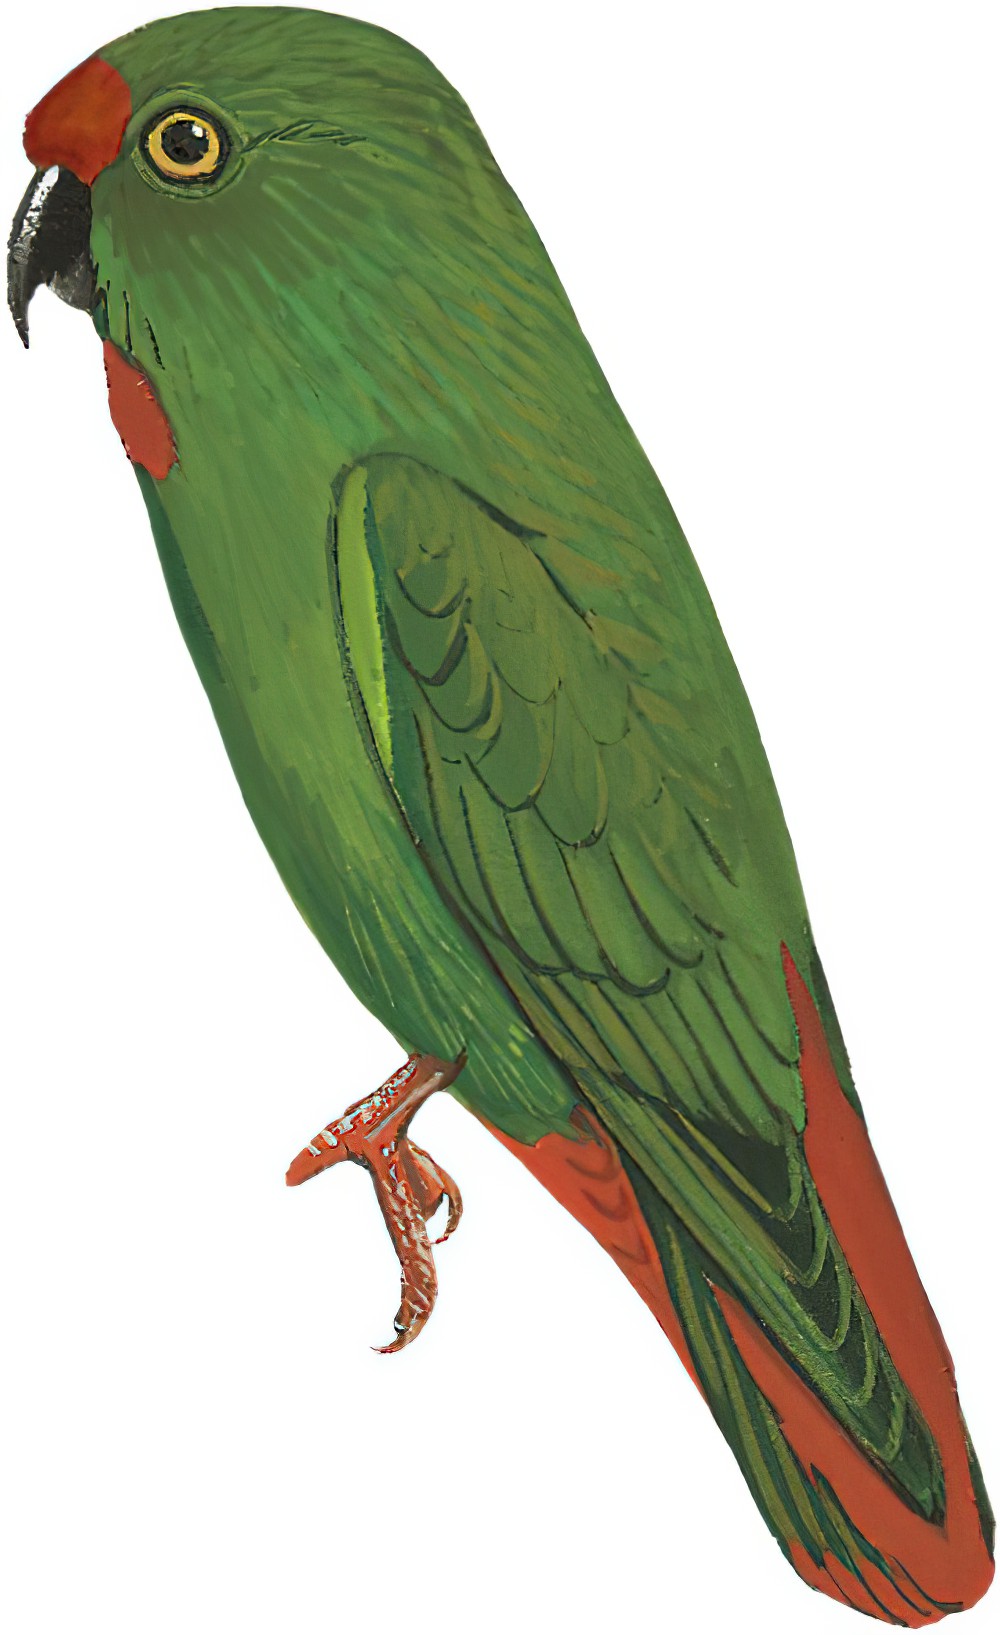 Sangihe Hanging-Parrot / Loriculus catamene